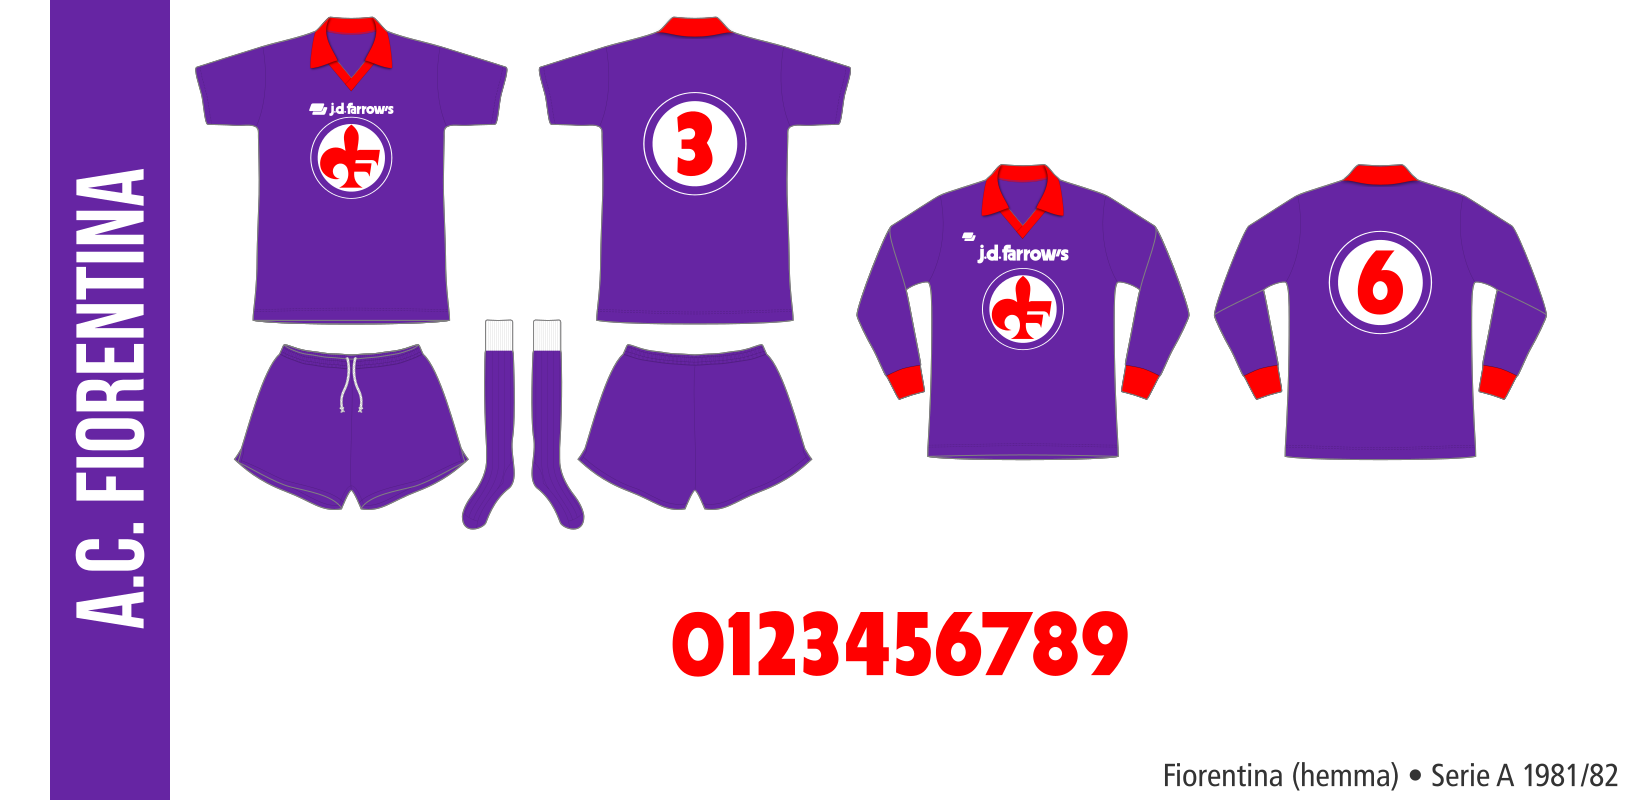 Fiorentina 1981/82 (hemma)